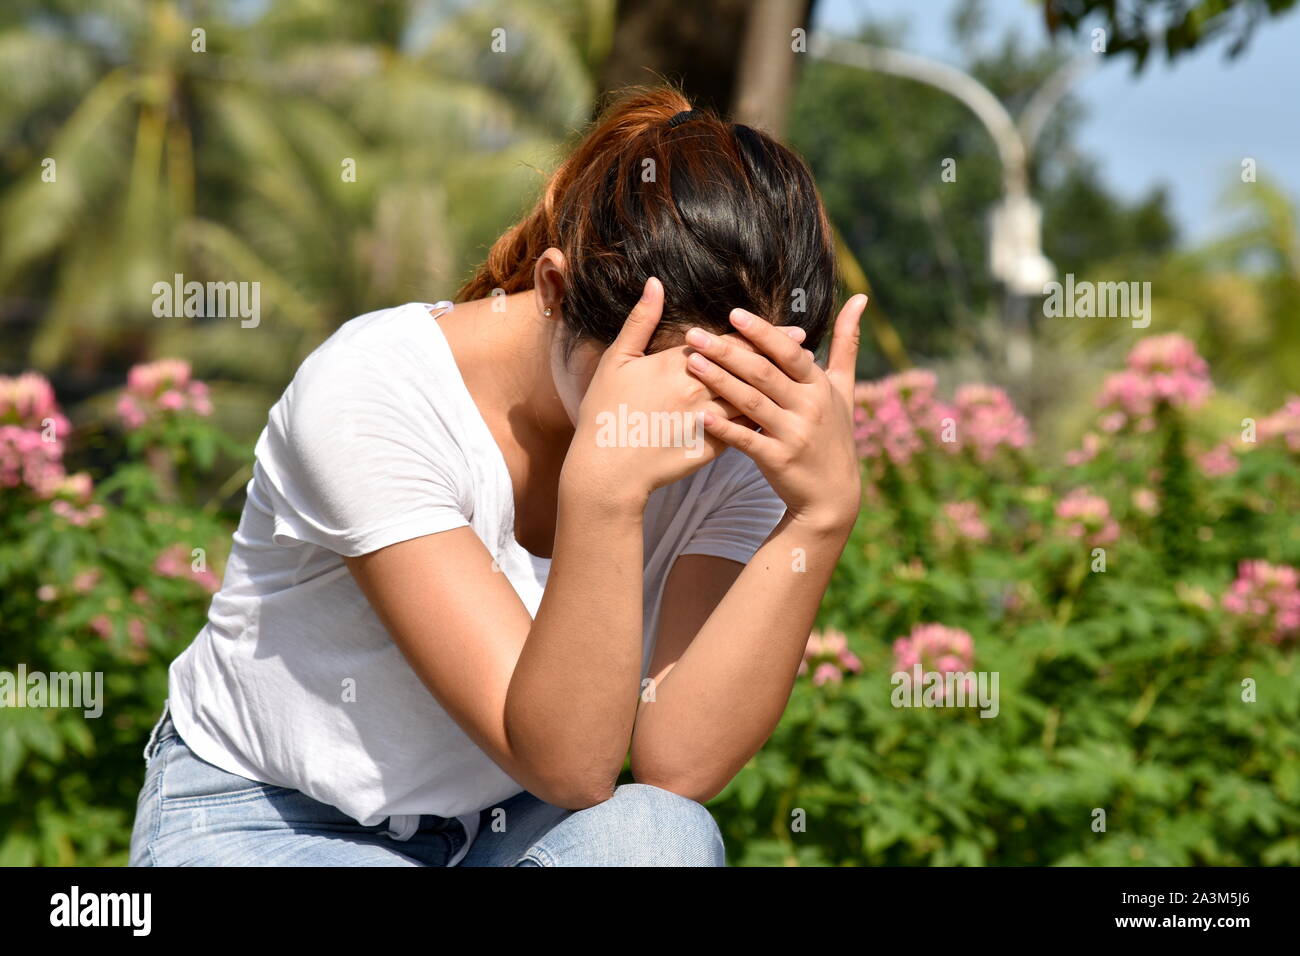 Female And Sadness Stock Photo